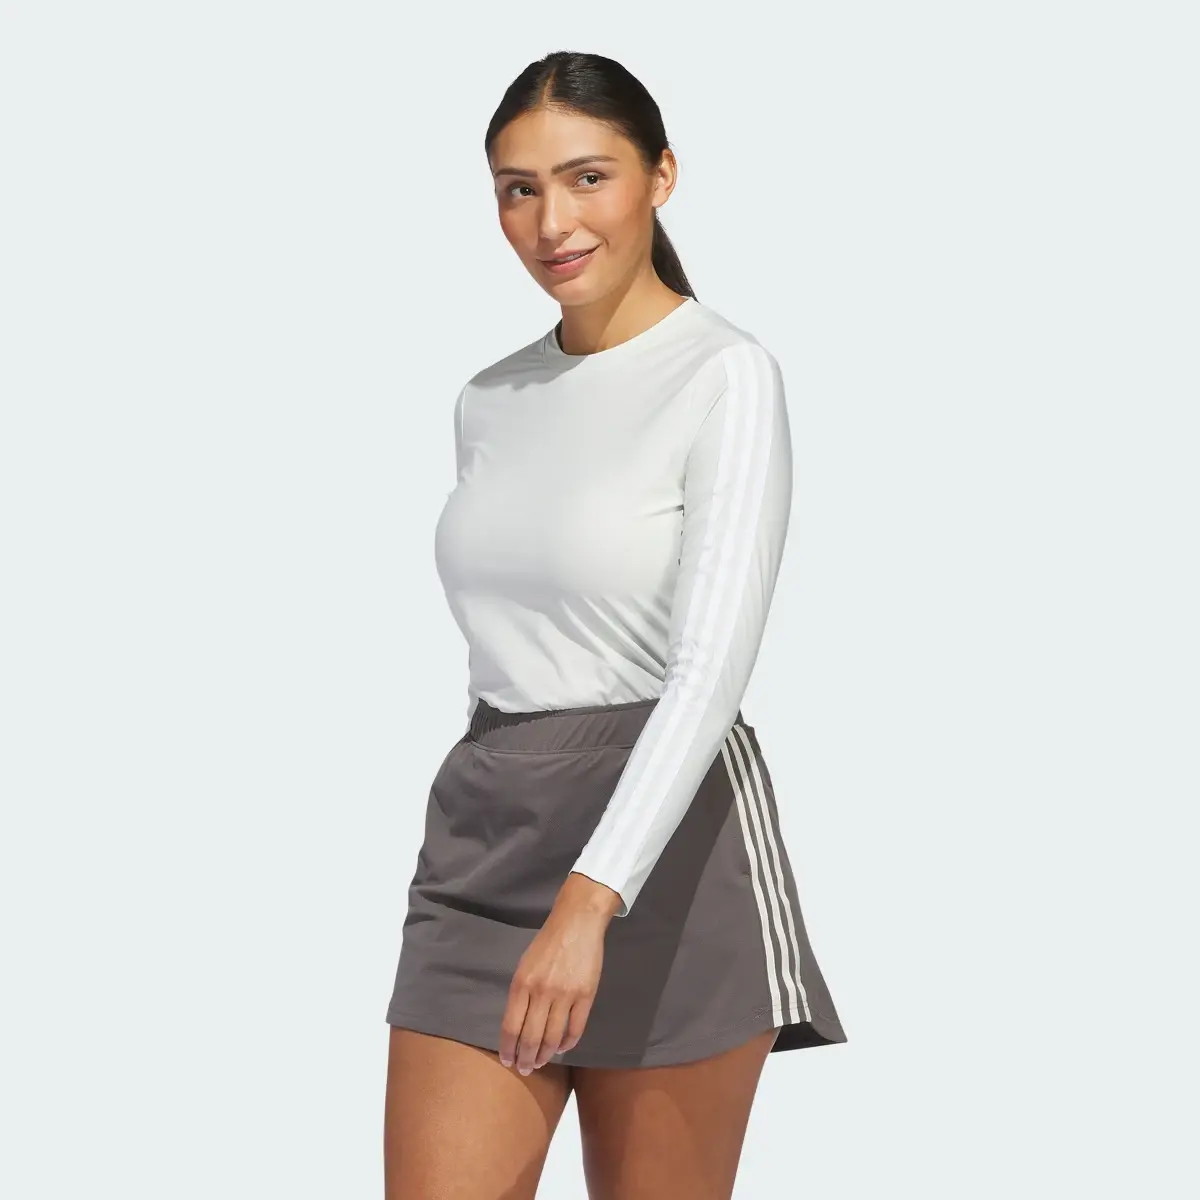 Adidas Women's Ultimate365 TWISTKNIT Long Sleeve Shirt. 2